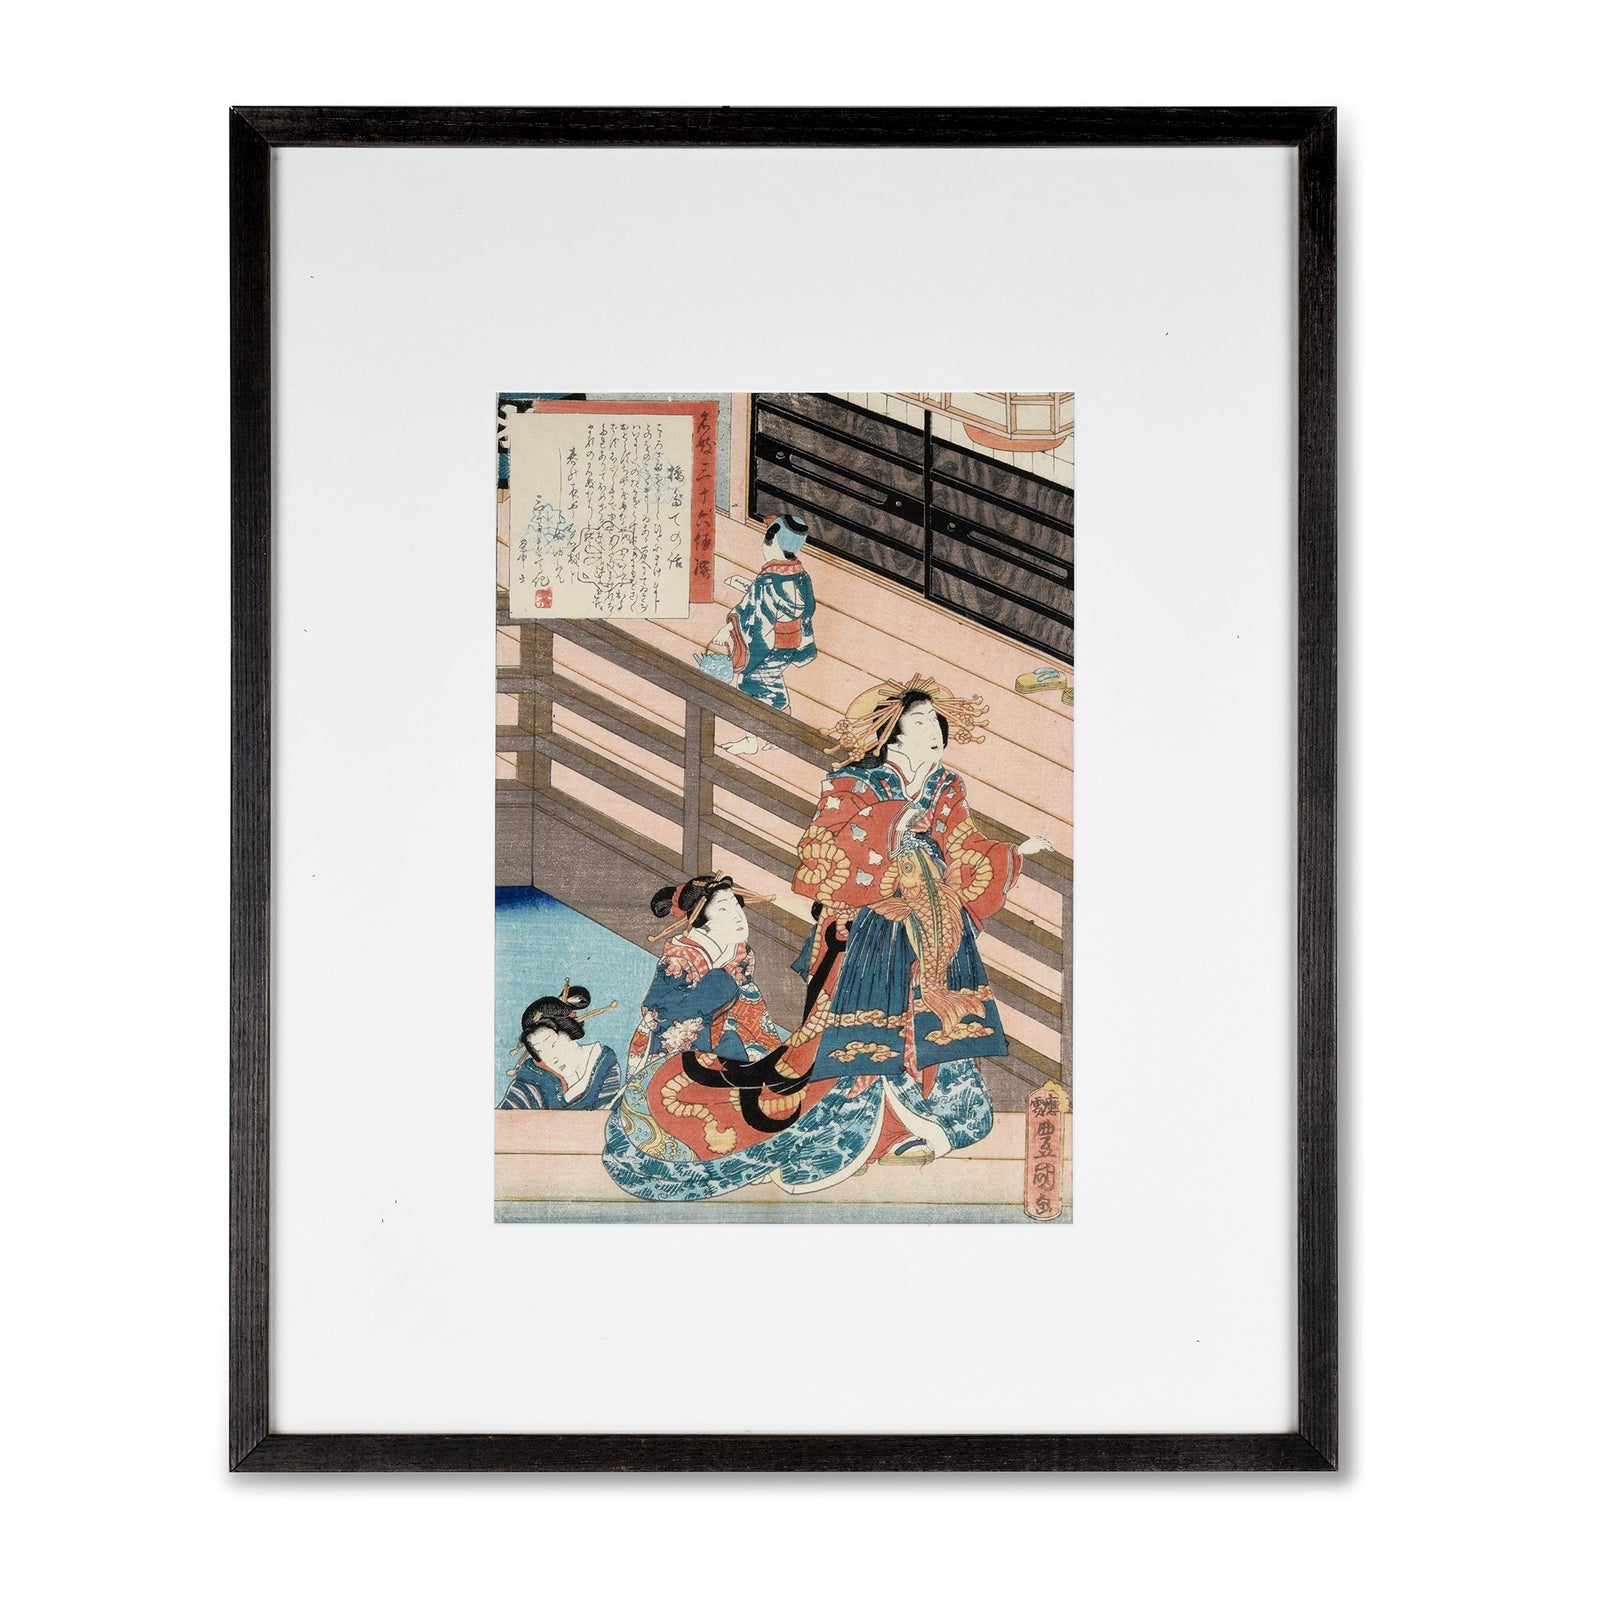 Framed Japanese Woodblock Print of Courtesans by Hashidate - Ca 1860 | Indigo Oriental Antiques